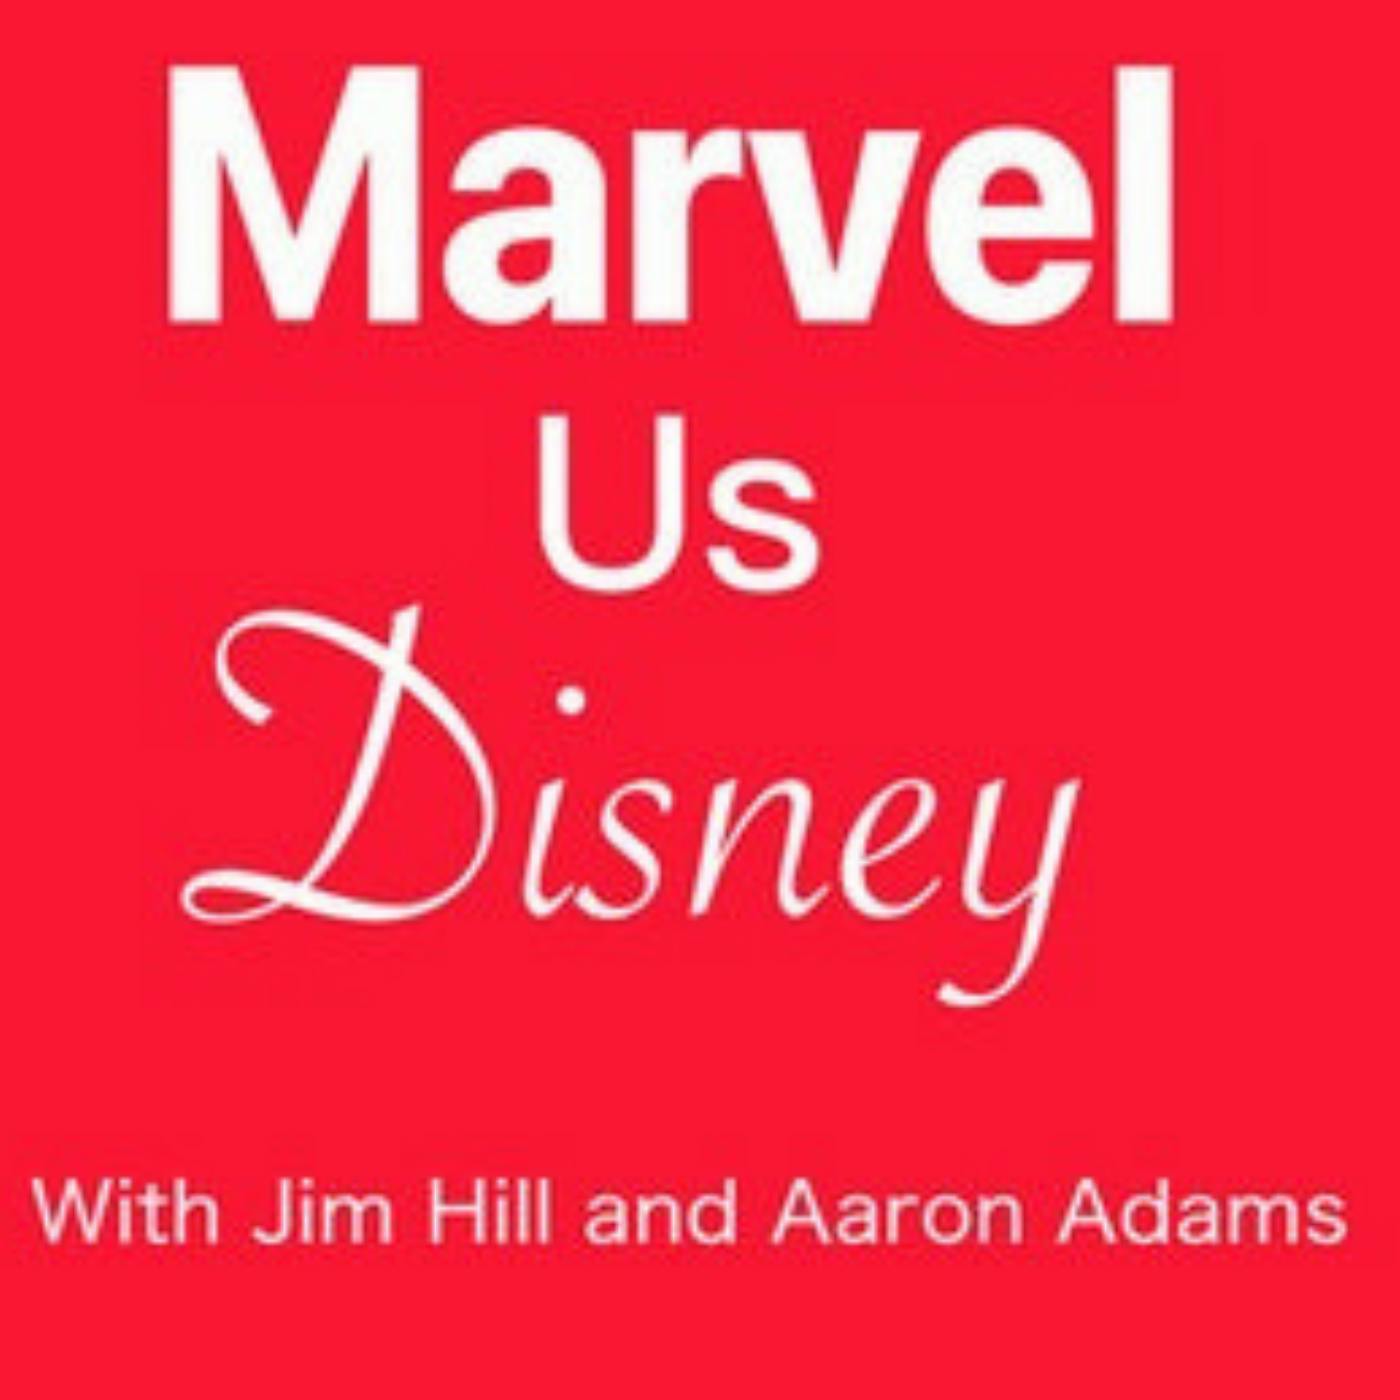 Marvel Us Disney Episode 62: James Gunn looks ahead to “Guardians Vol 3”